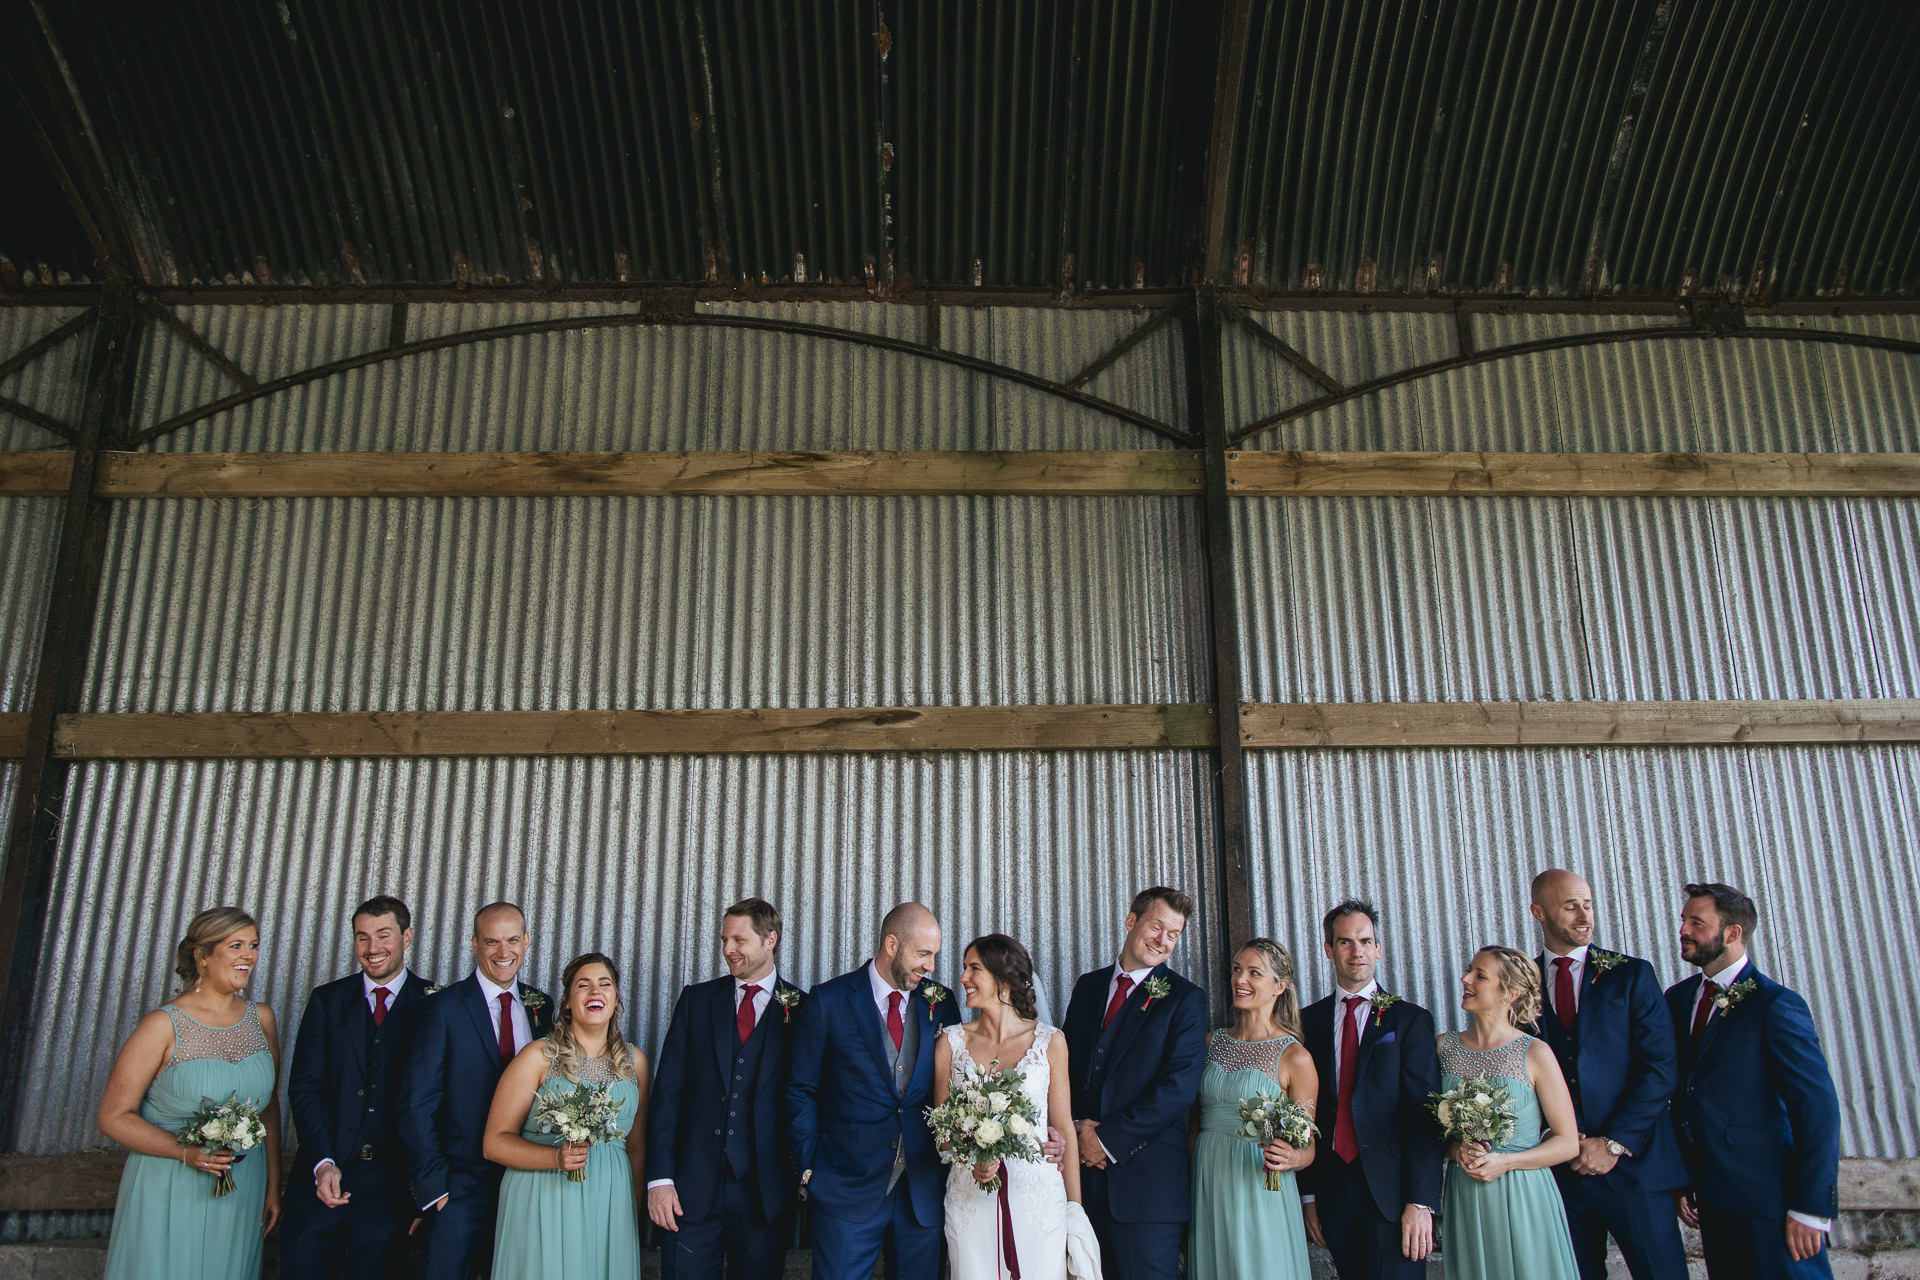 Wedding group photo in a barn